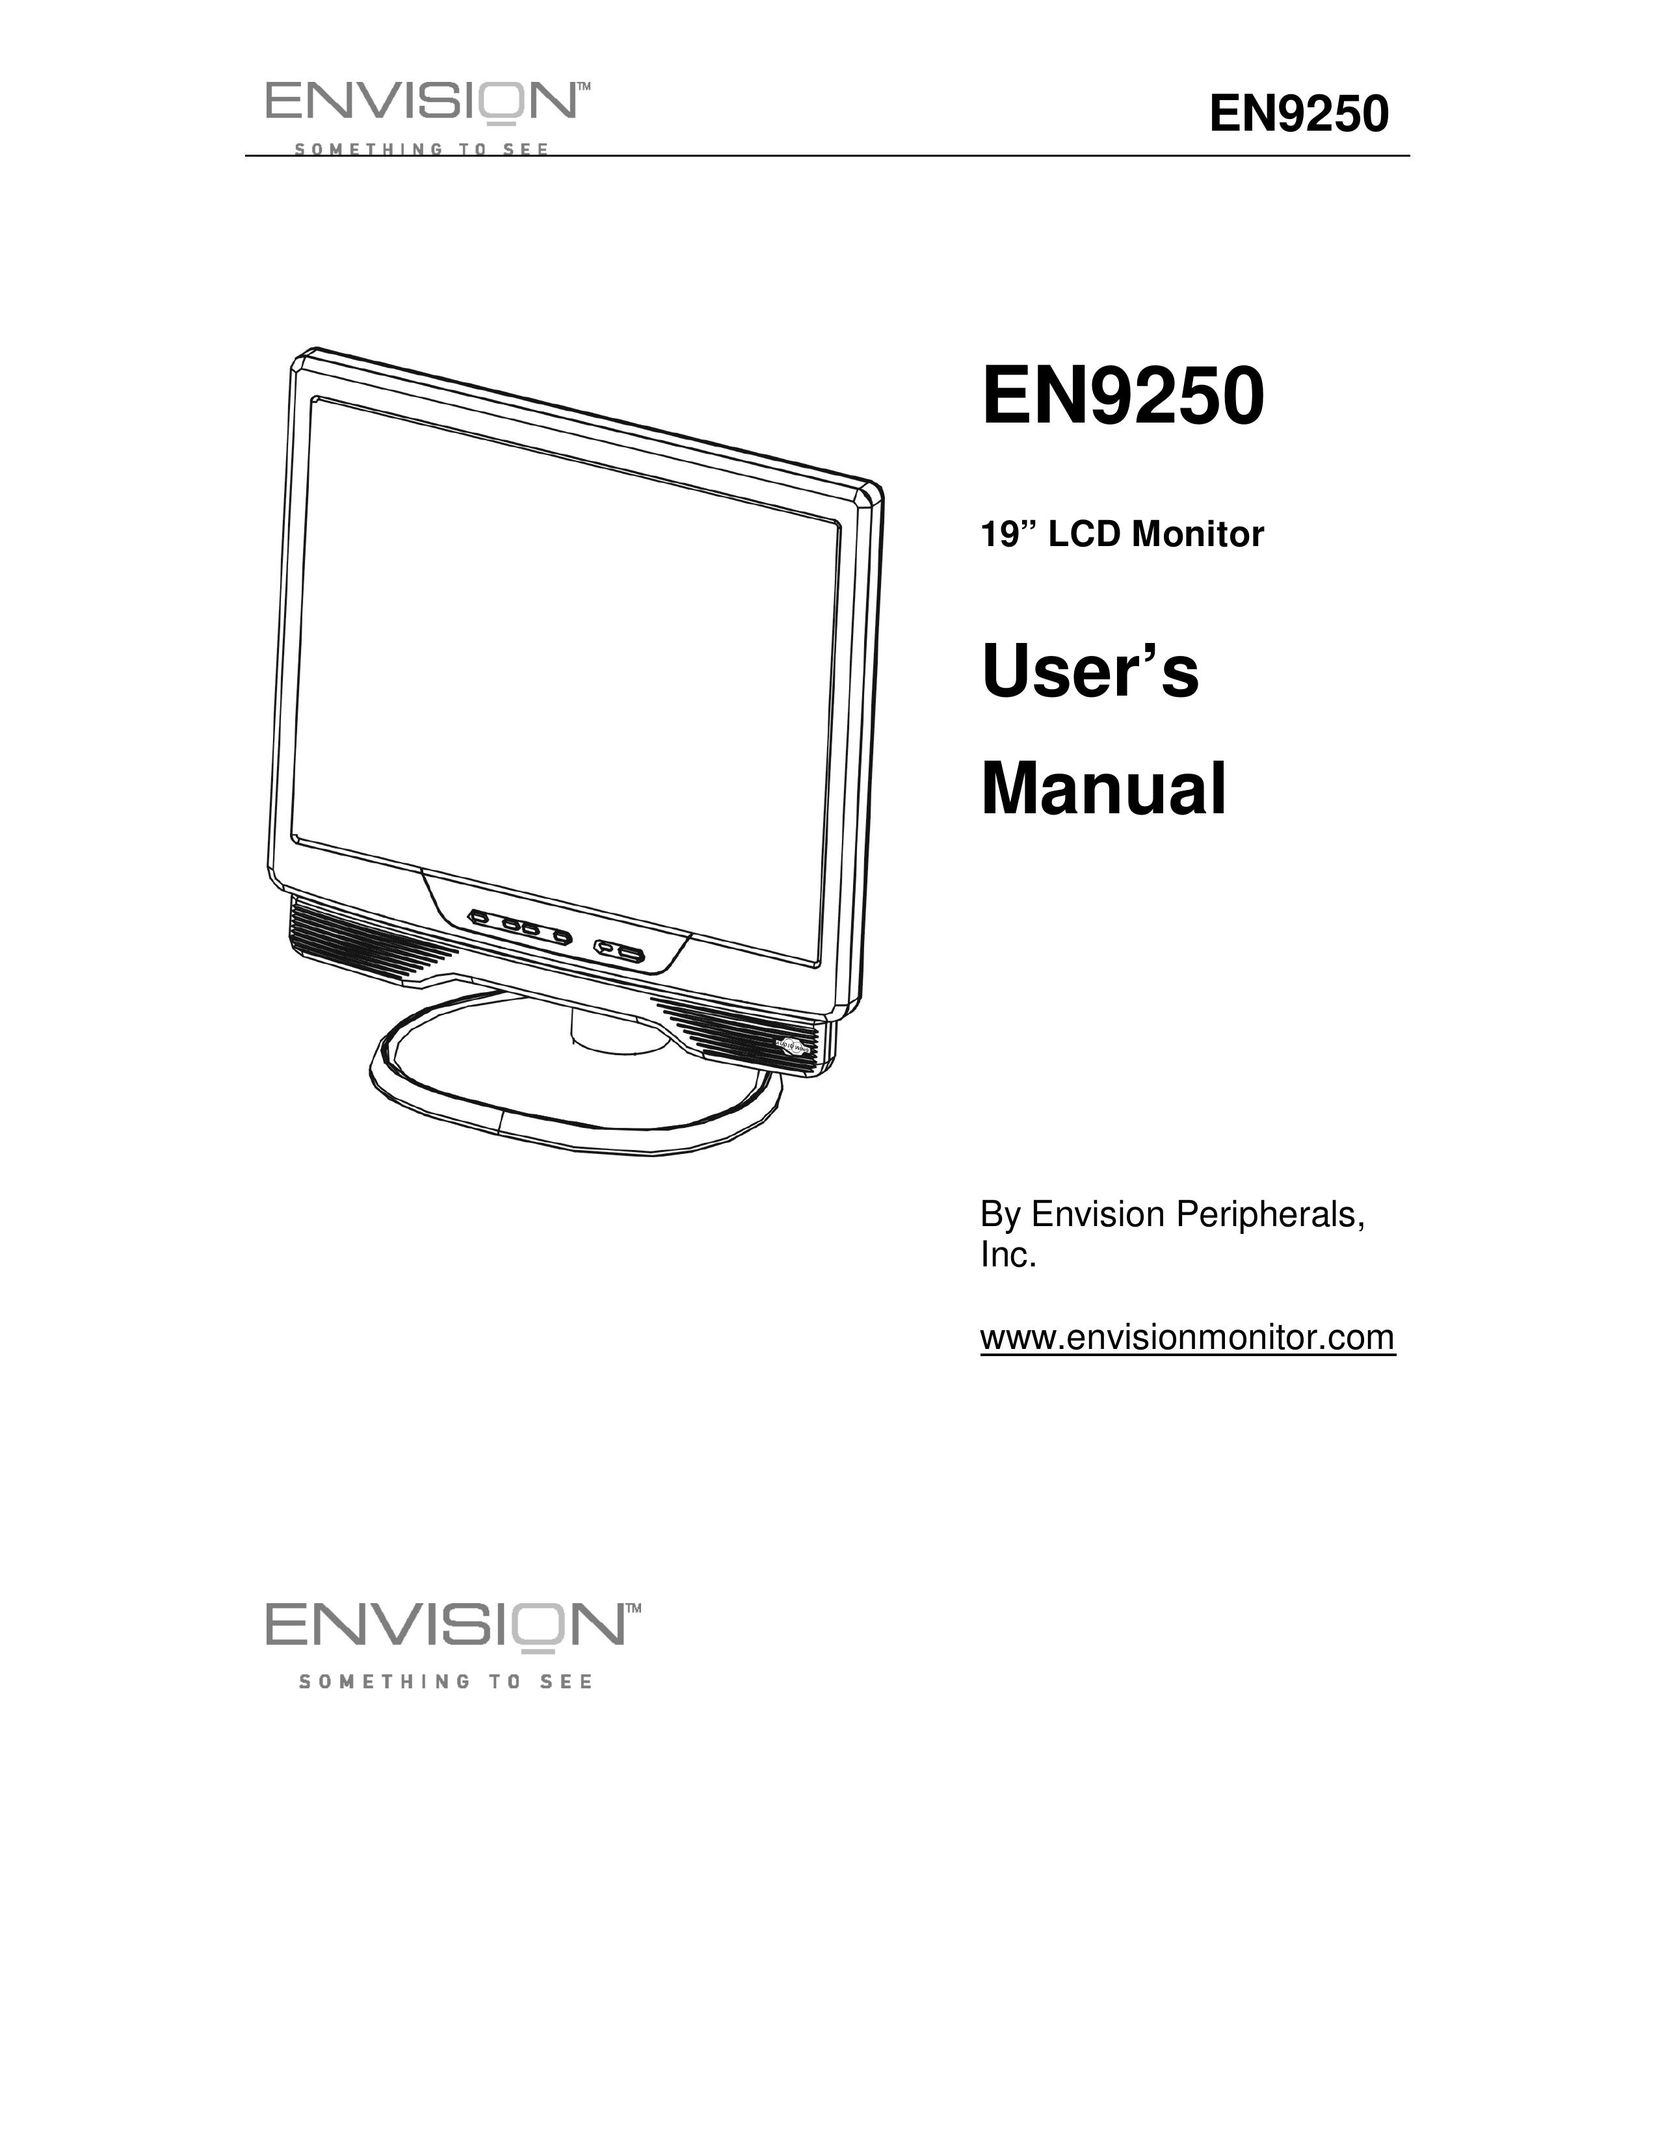 Envision Peripherals EN9250 Computer Monitor User Manual